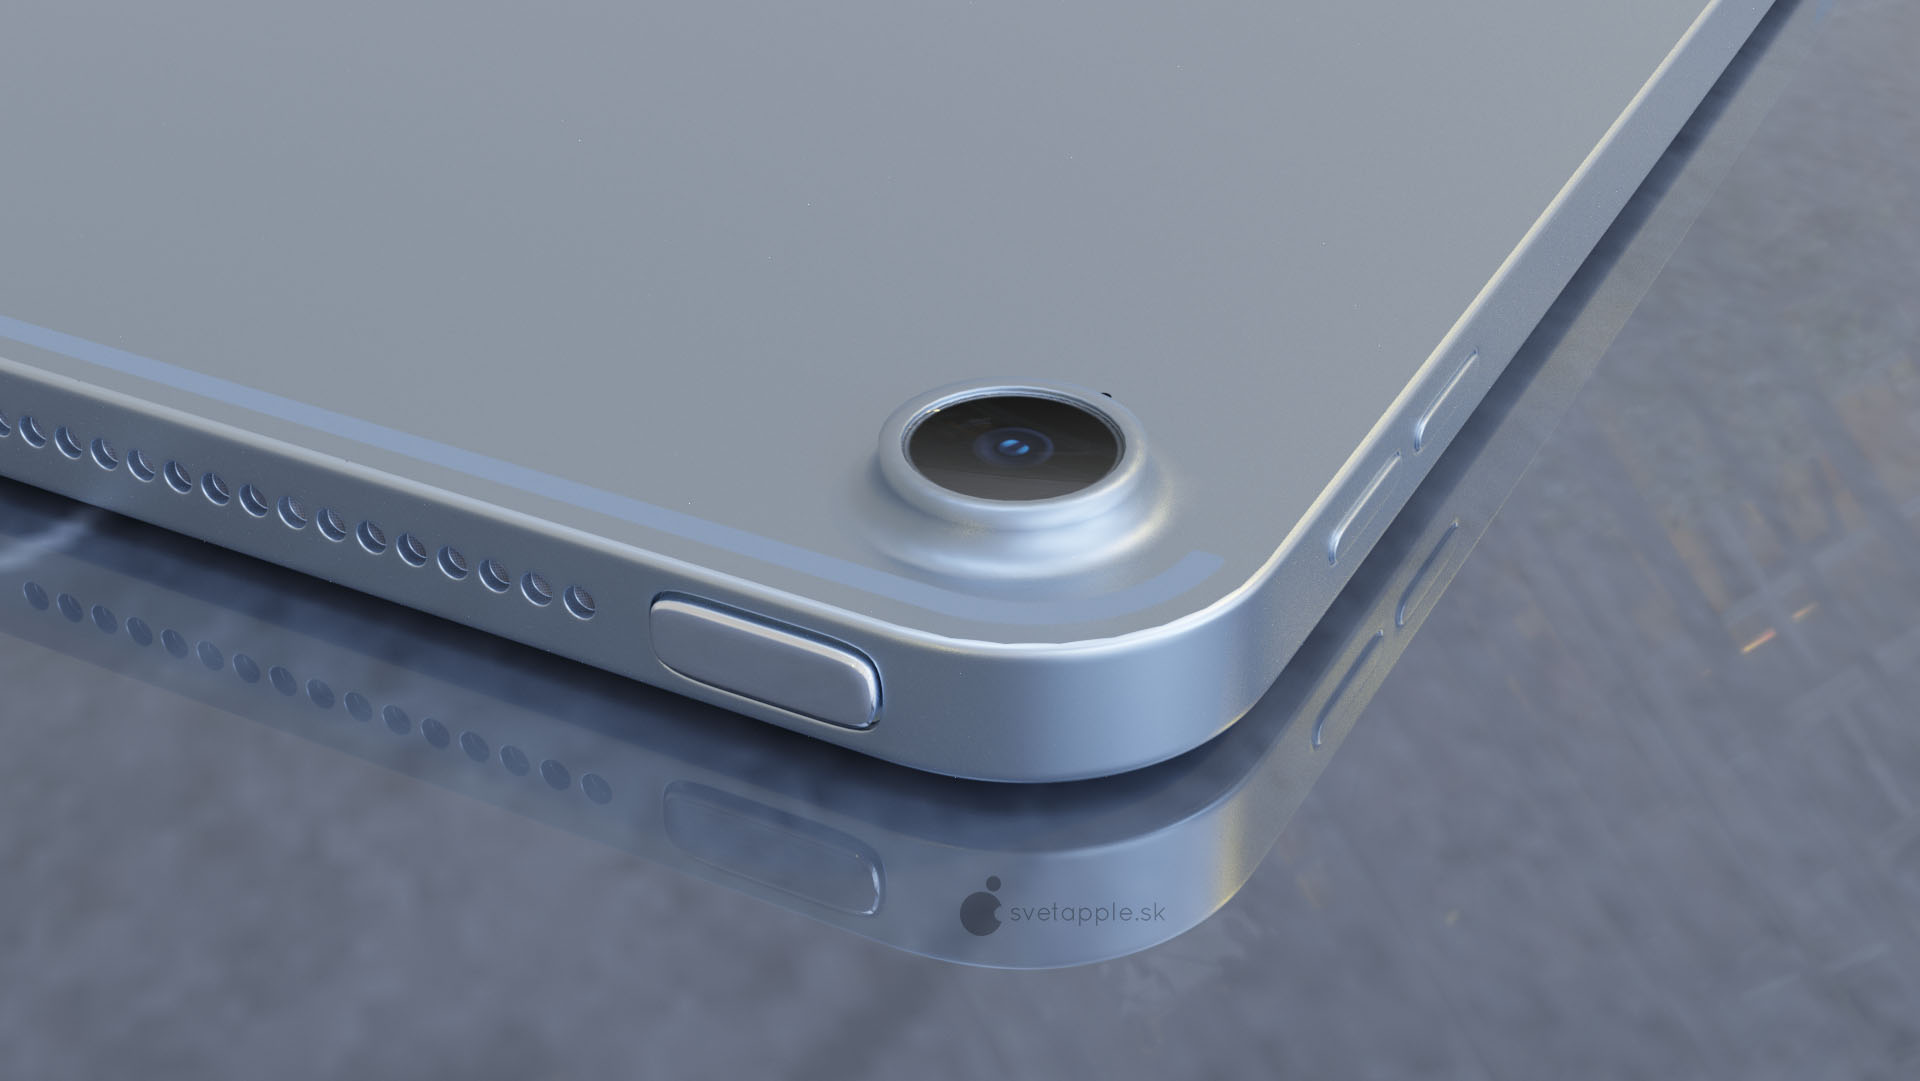 iPad Mini 6 render showcases thin bezels and USB-C port